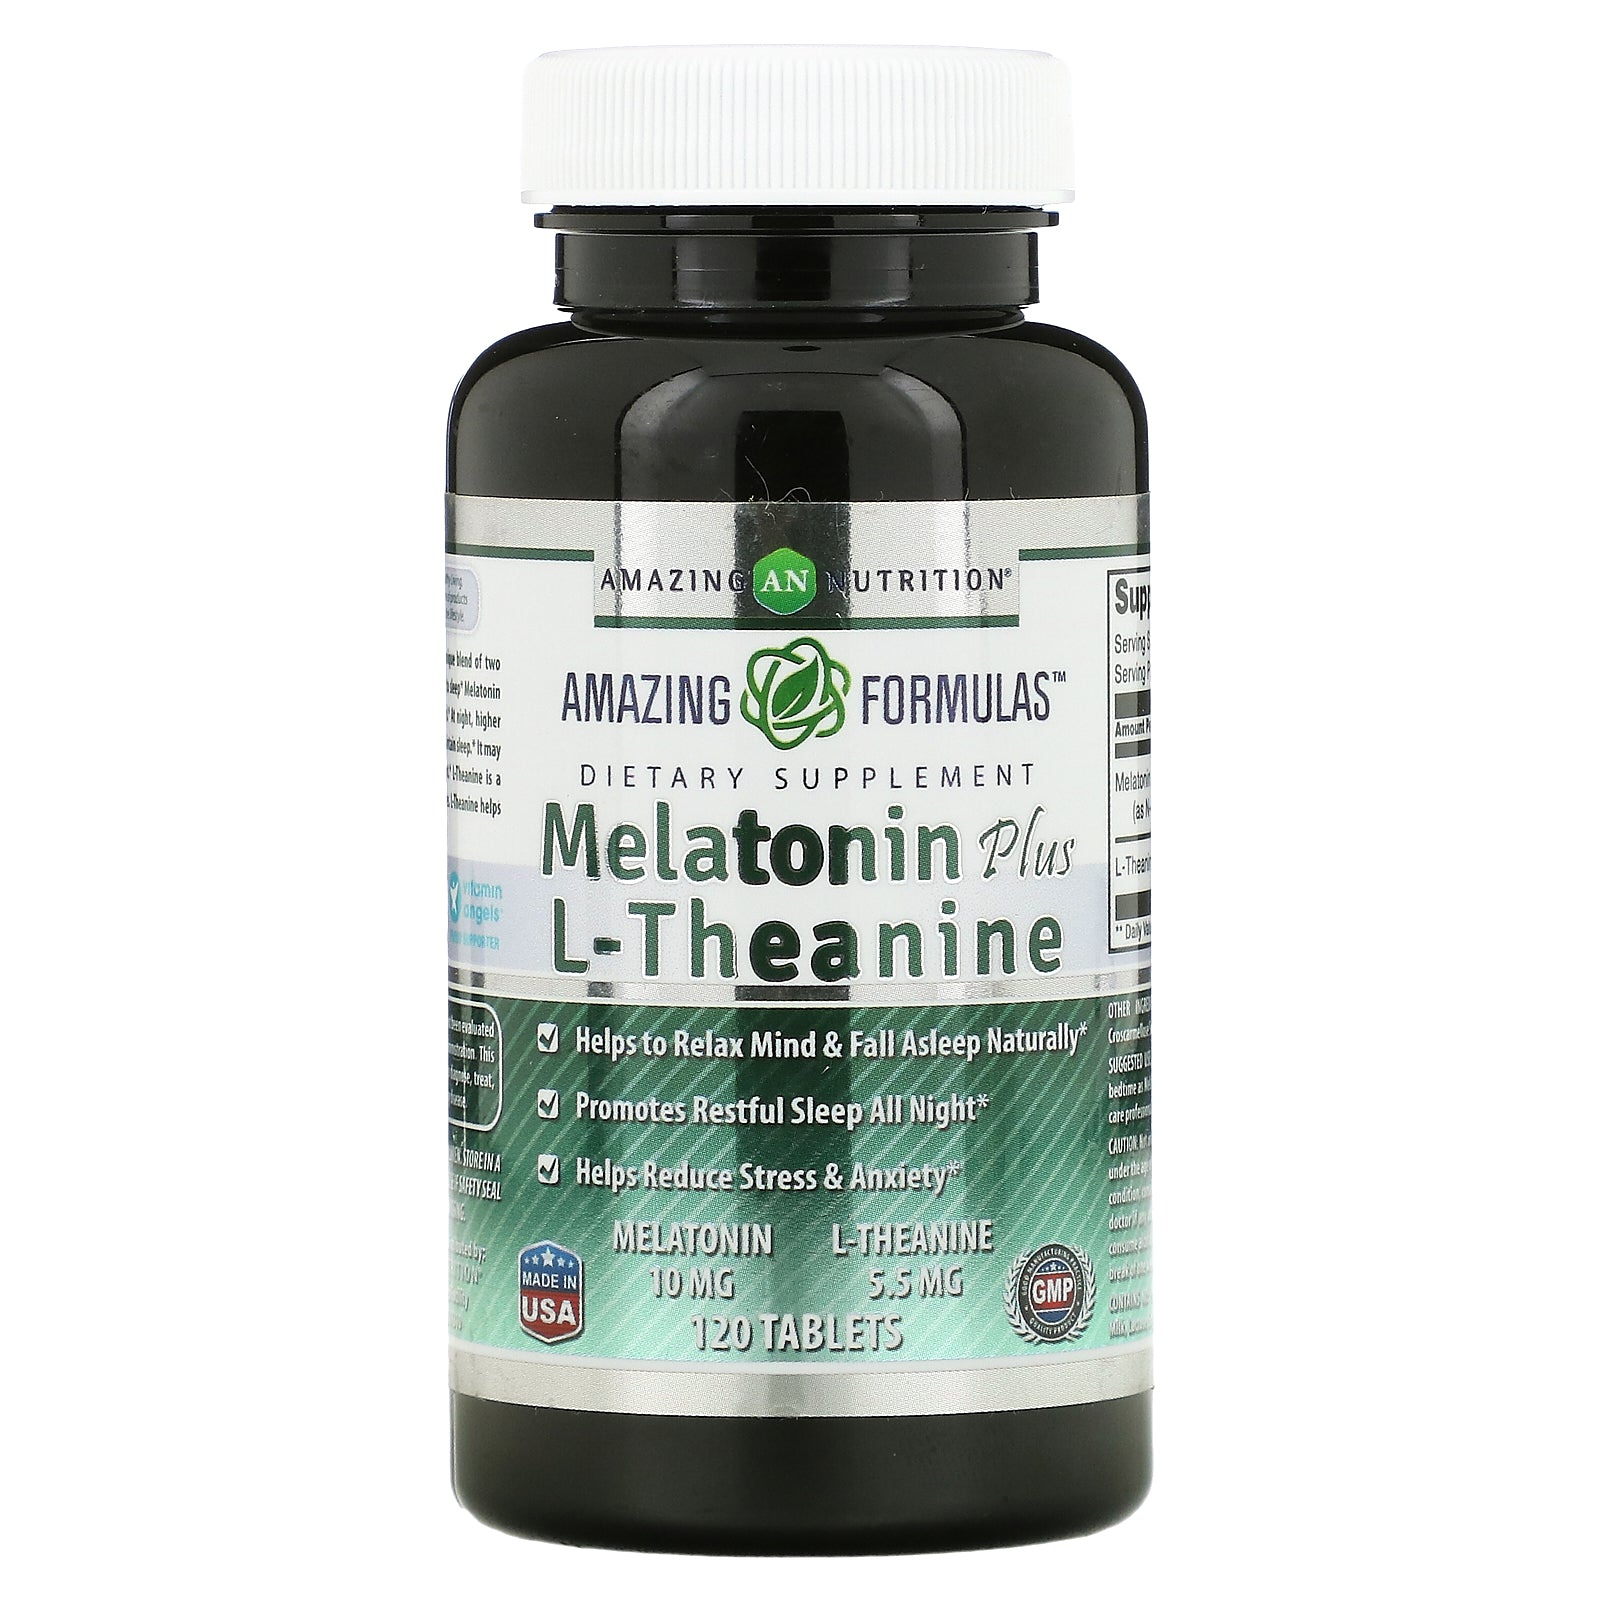 Amazing Nutrition, Melatonin Plus L-Theanine, 10 mg